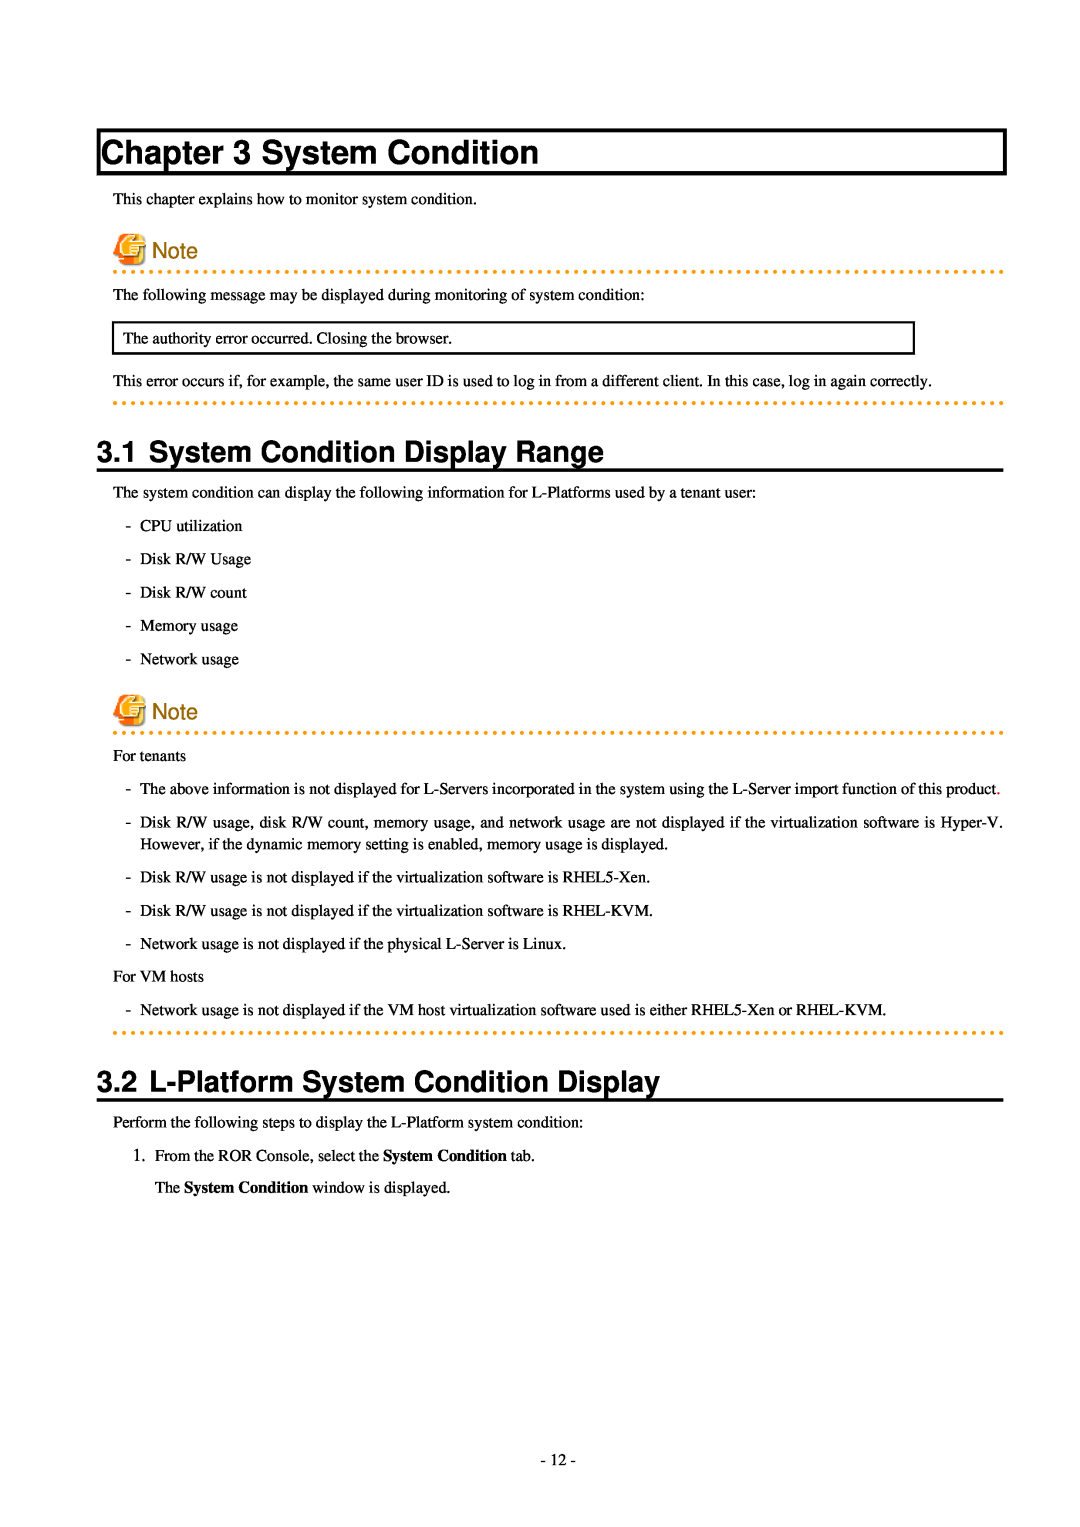 Fujitsu V3.0.0 manual System Condition Display Range, L-Platform System Condition Display 